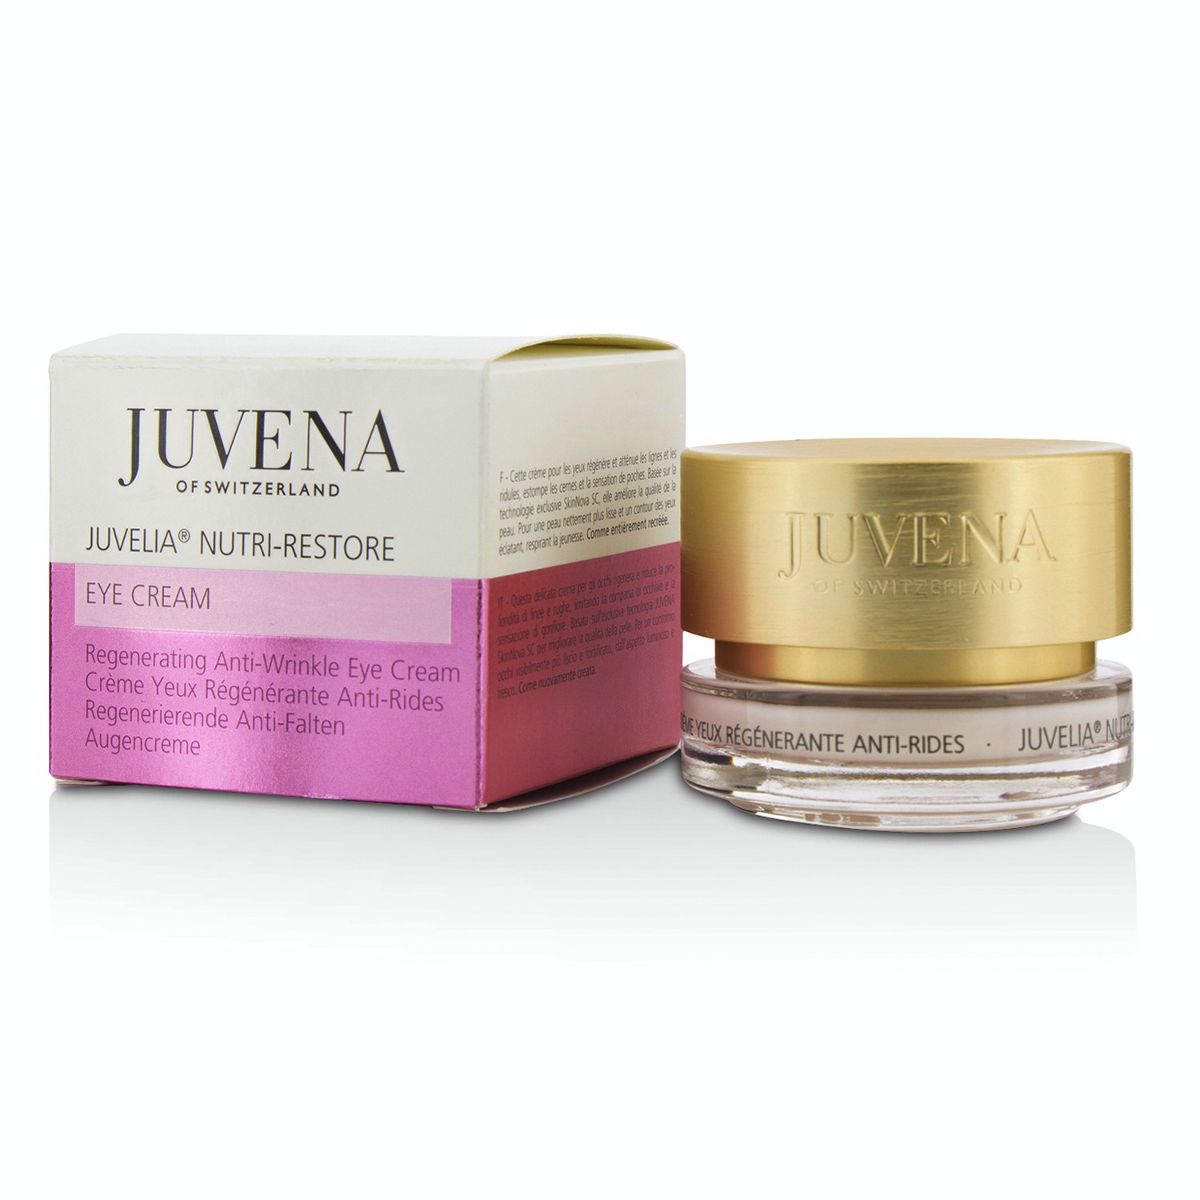 Juvelia Nutri-Restore Regenerating Anti-Wrinkle Eye Cream Juvena Image